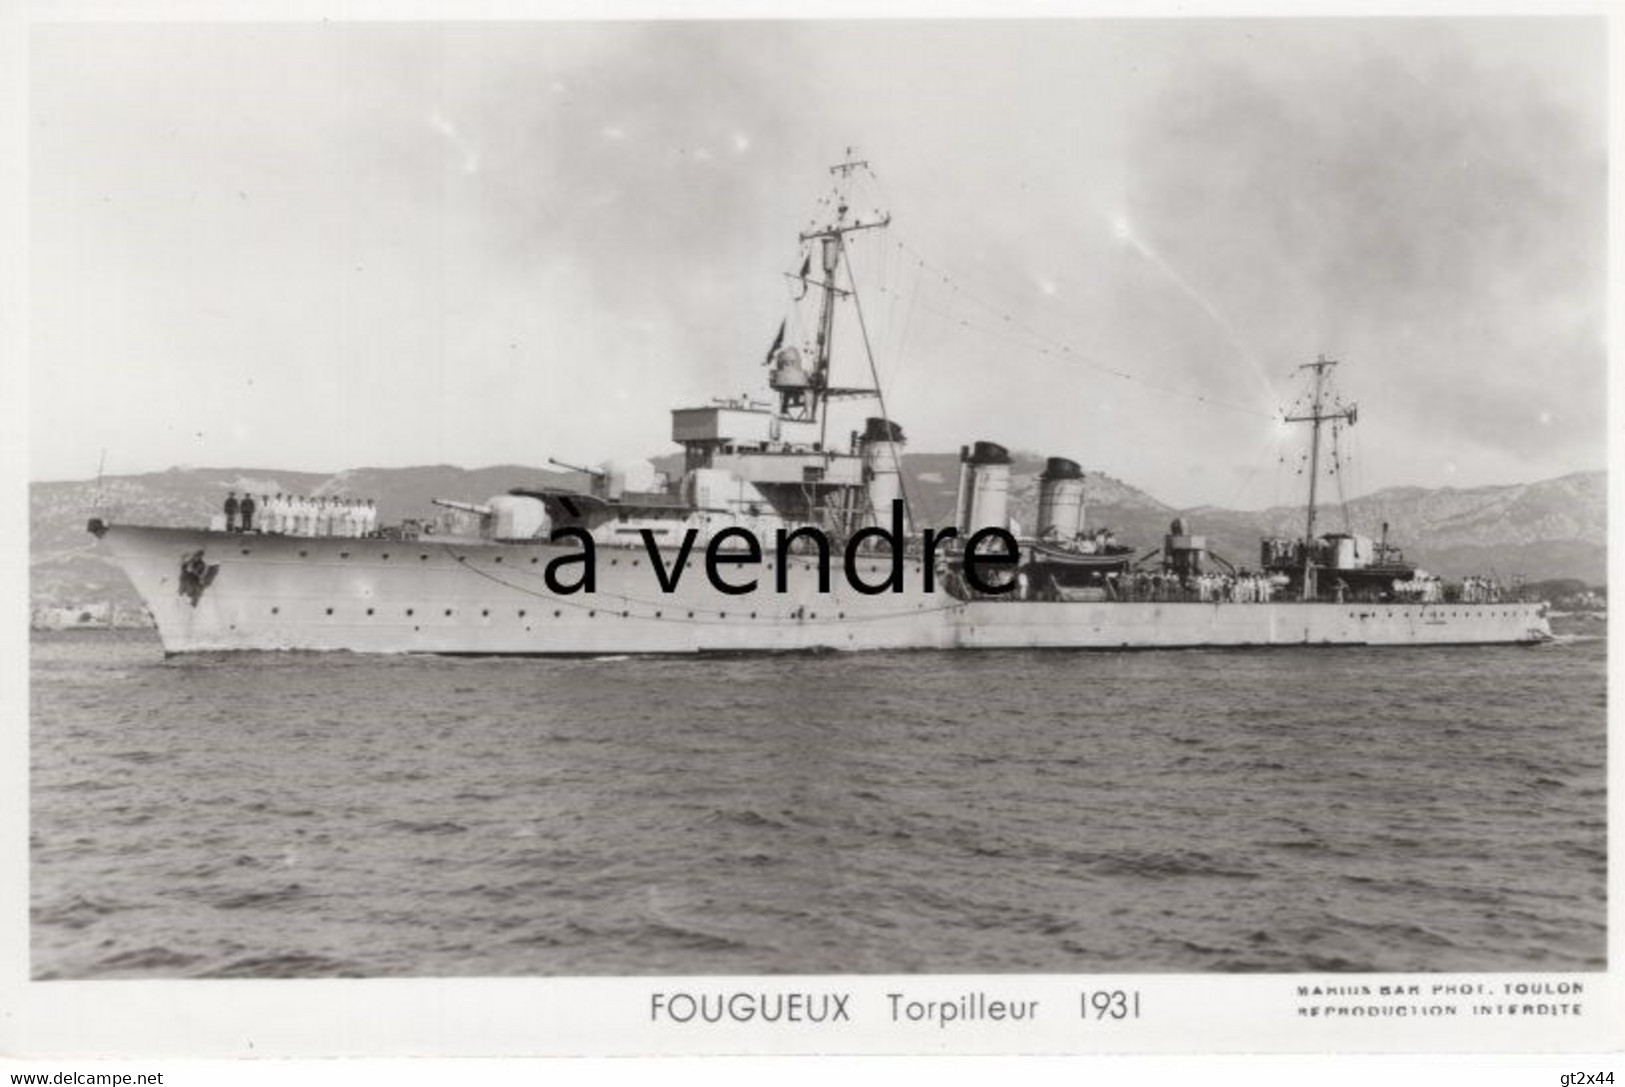 FOUGUEUX, Torpilleur, 1931 - Warships